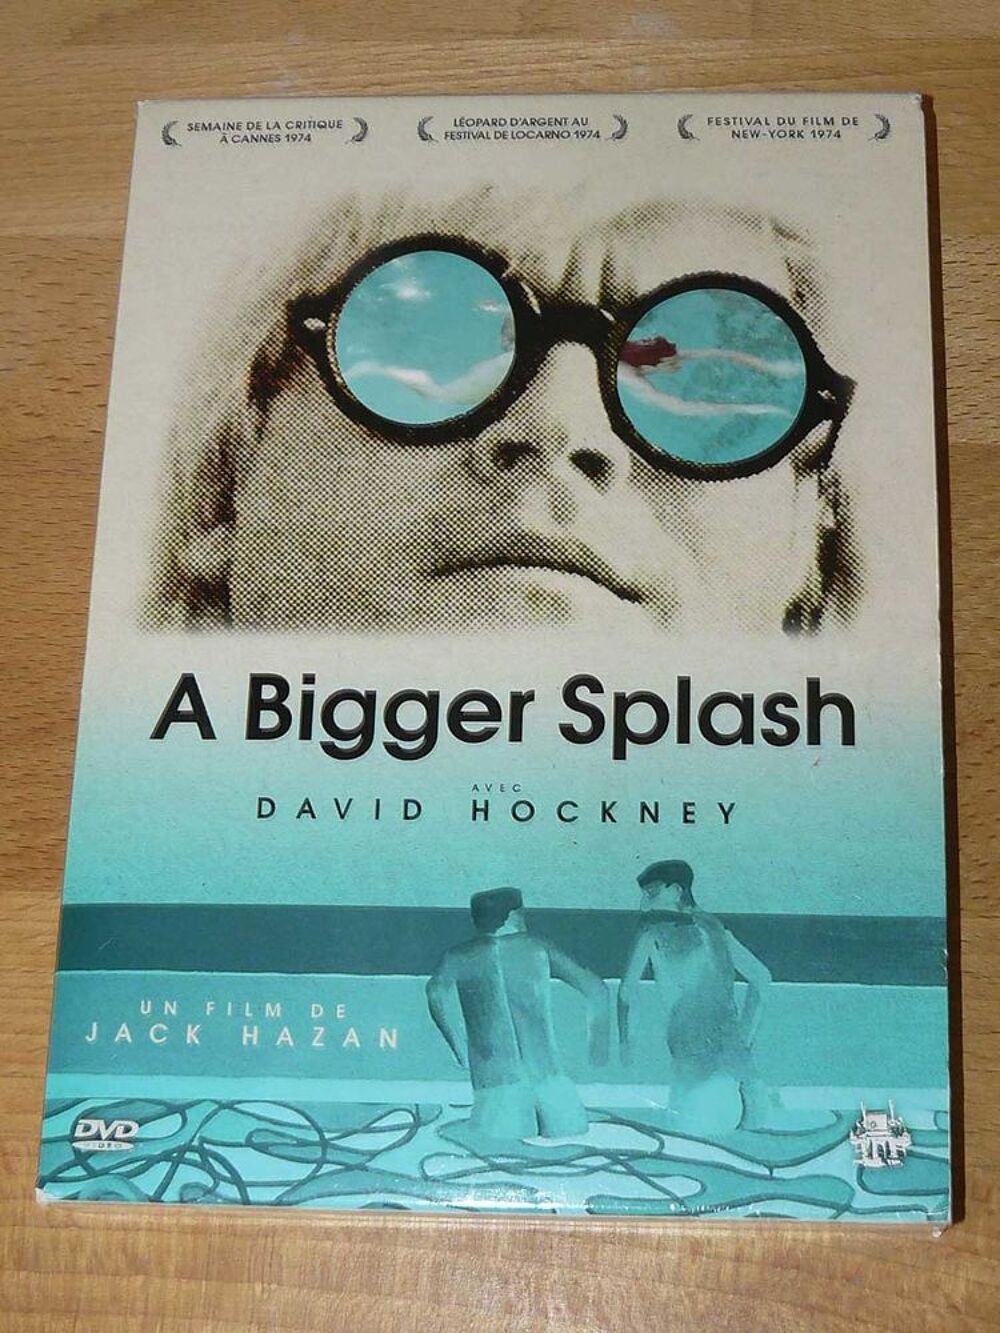 DVD A Bigger Splash - David Hockney
DVD et blu-ray